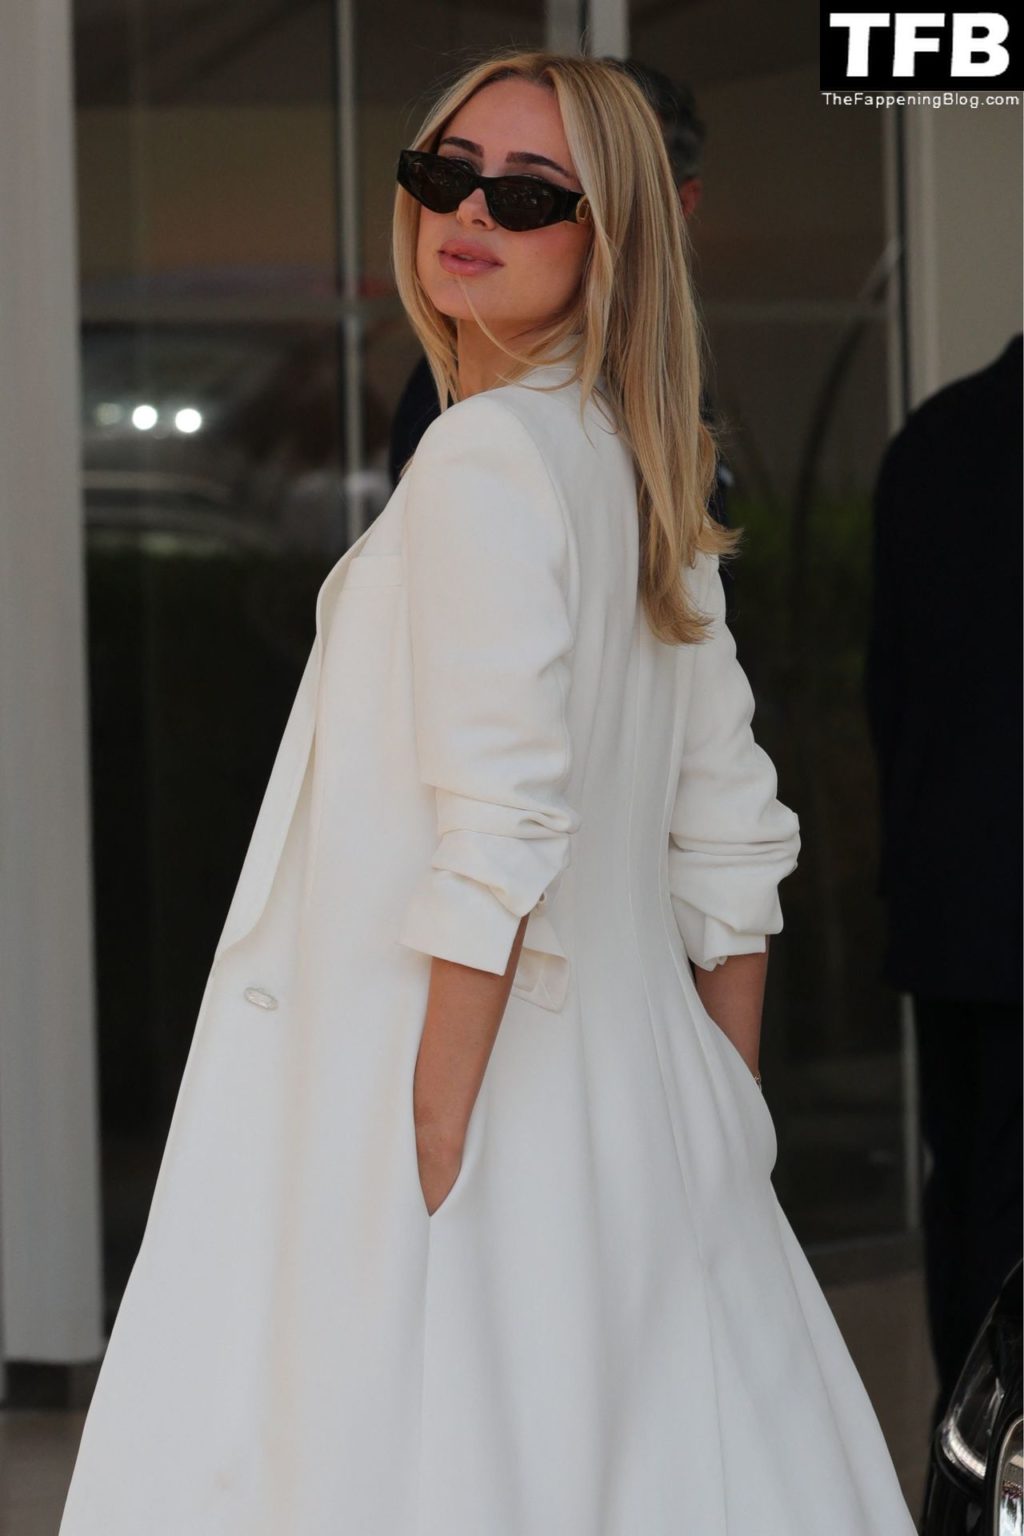 Kimberley Garner is Seen Leaving “Martinez” Hotel in Cannes (20 Photos)